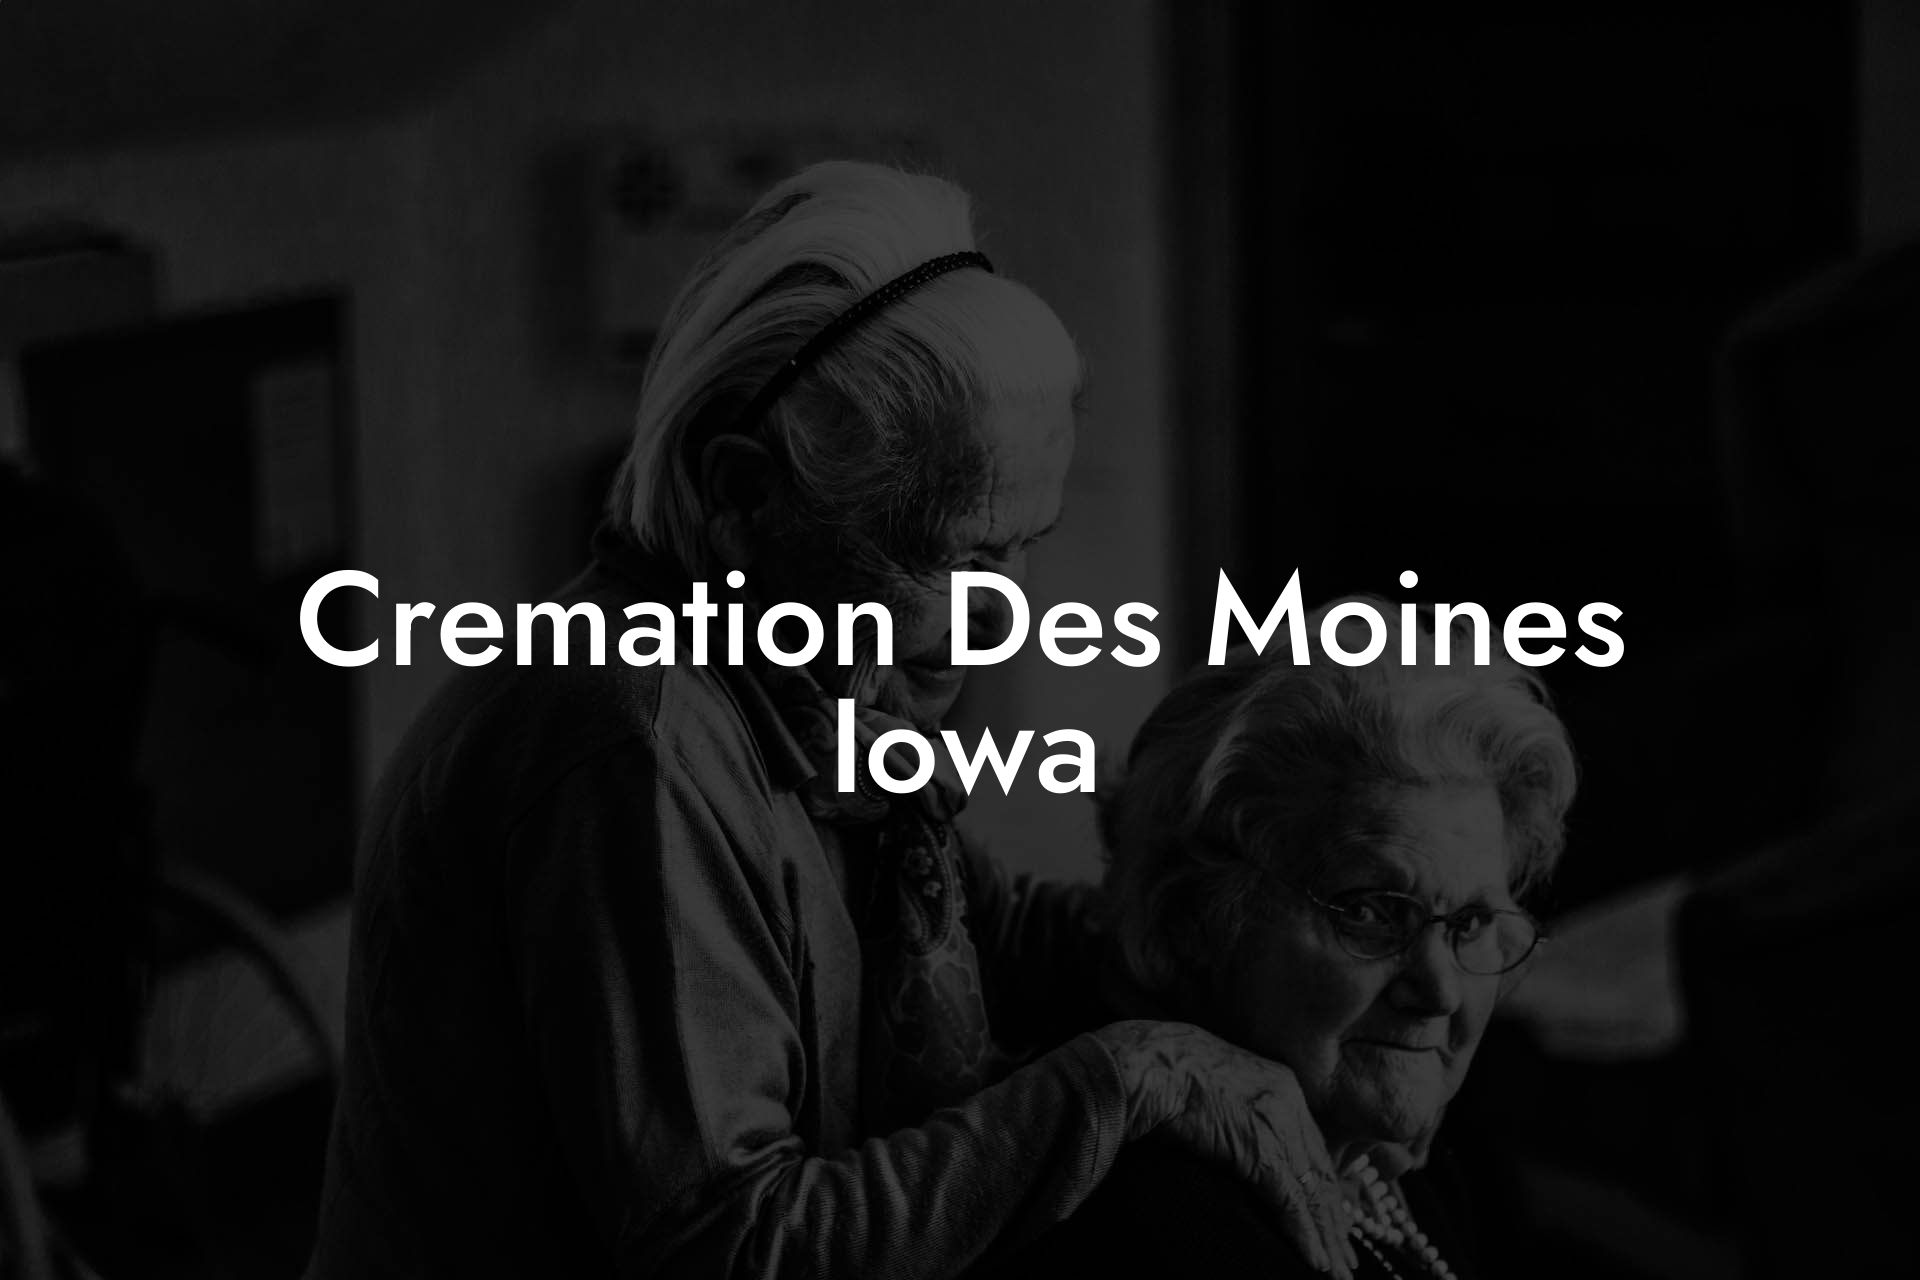 Cremation Des Moines Iowa